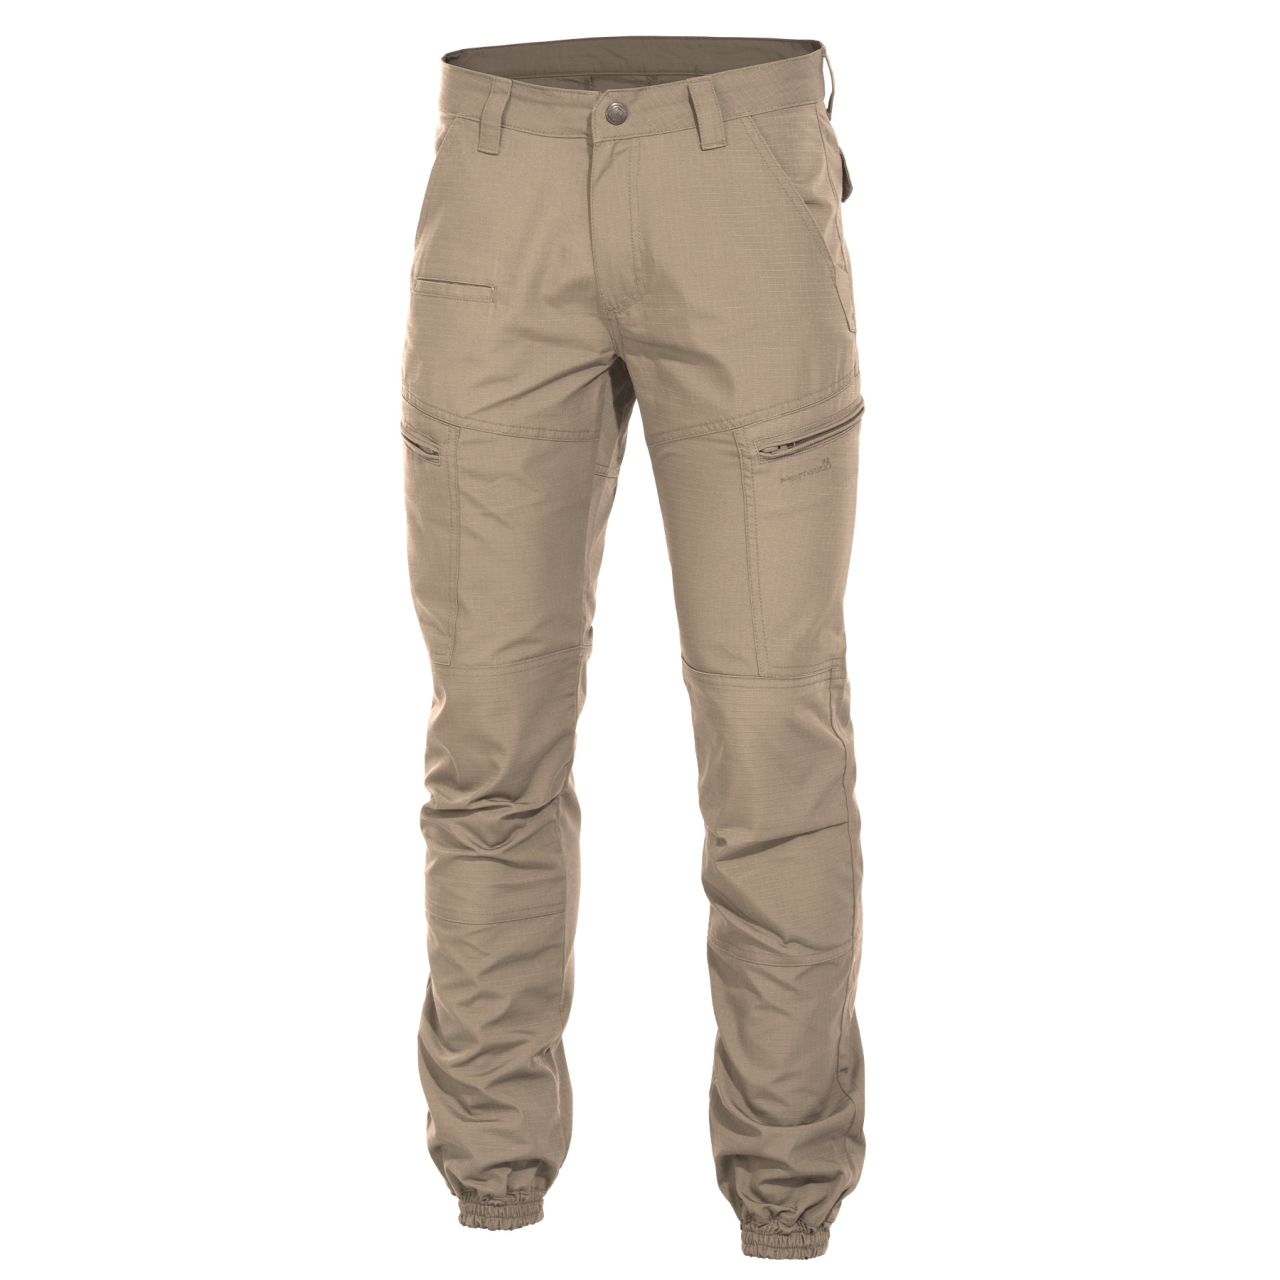 Kalhoty Pentagon Ypero - béžové, 52 L